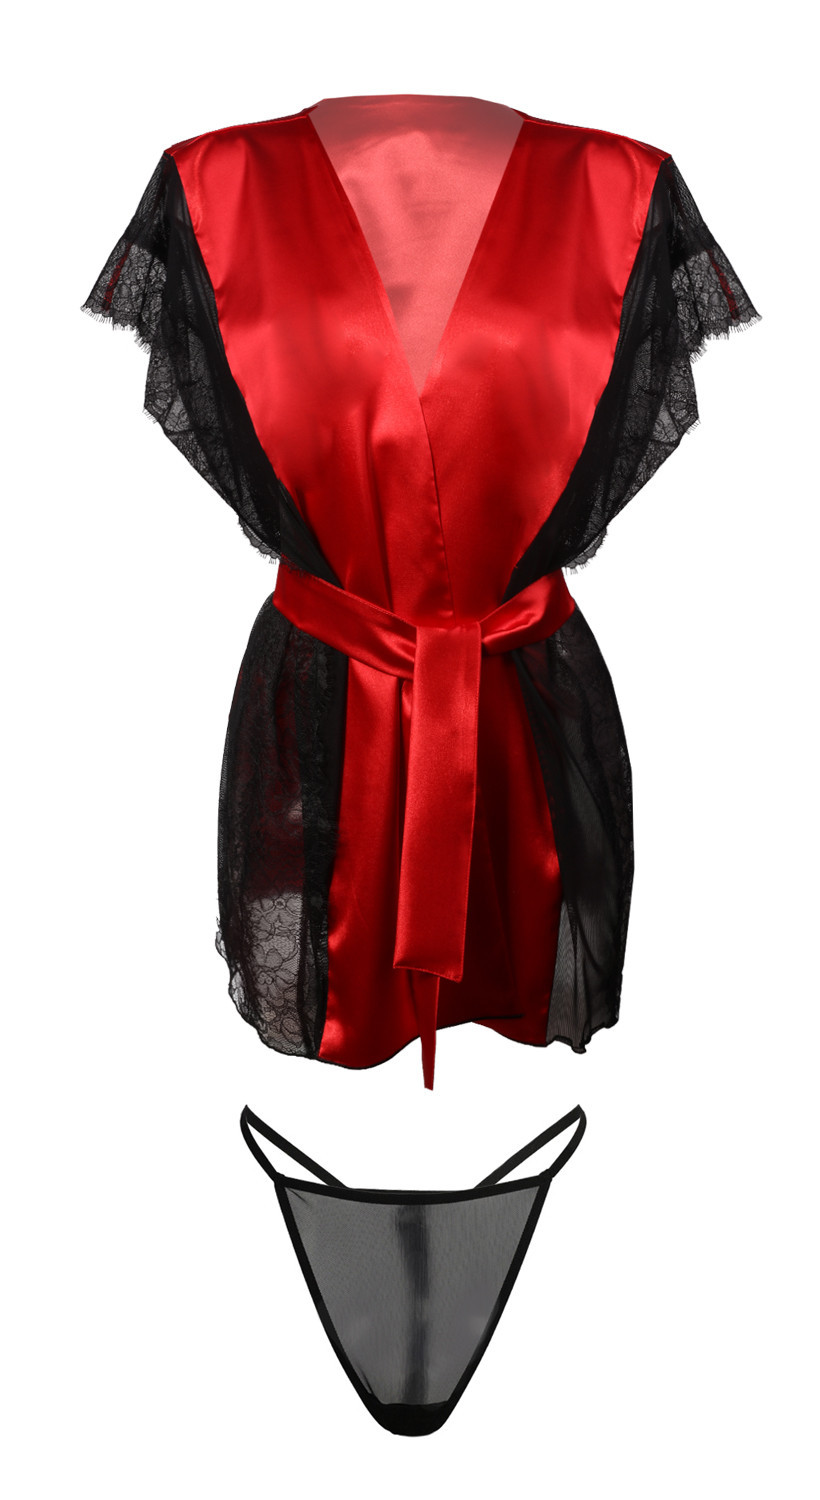 DKaren Housecoat Bridget Red XL